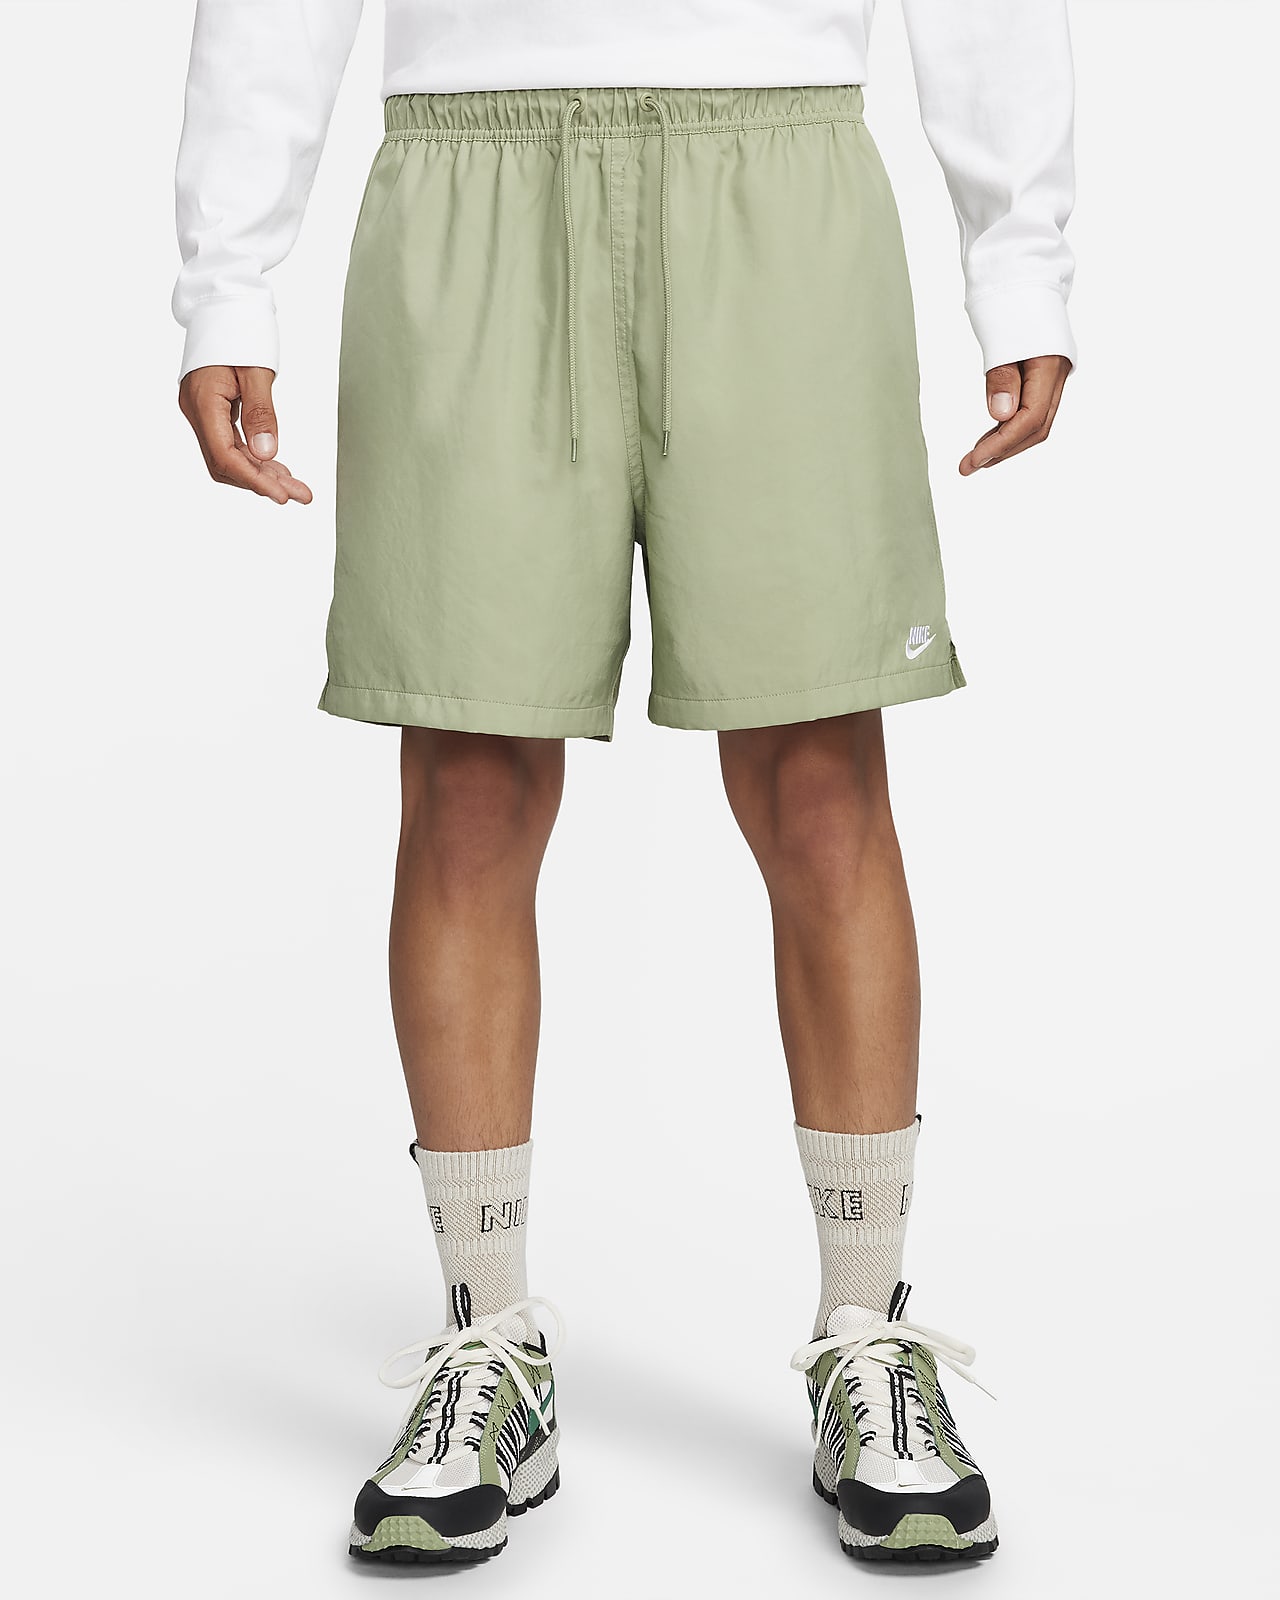 Shorts de tejido Woven Flow para hombre Nike Club